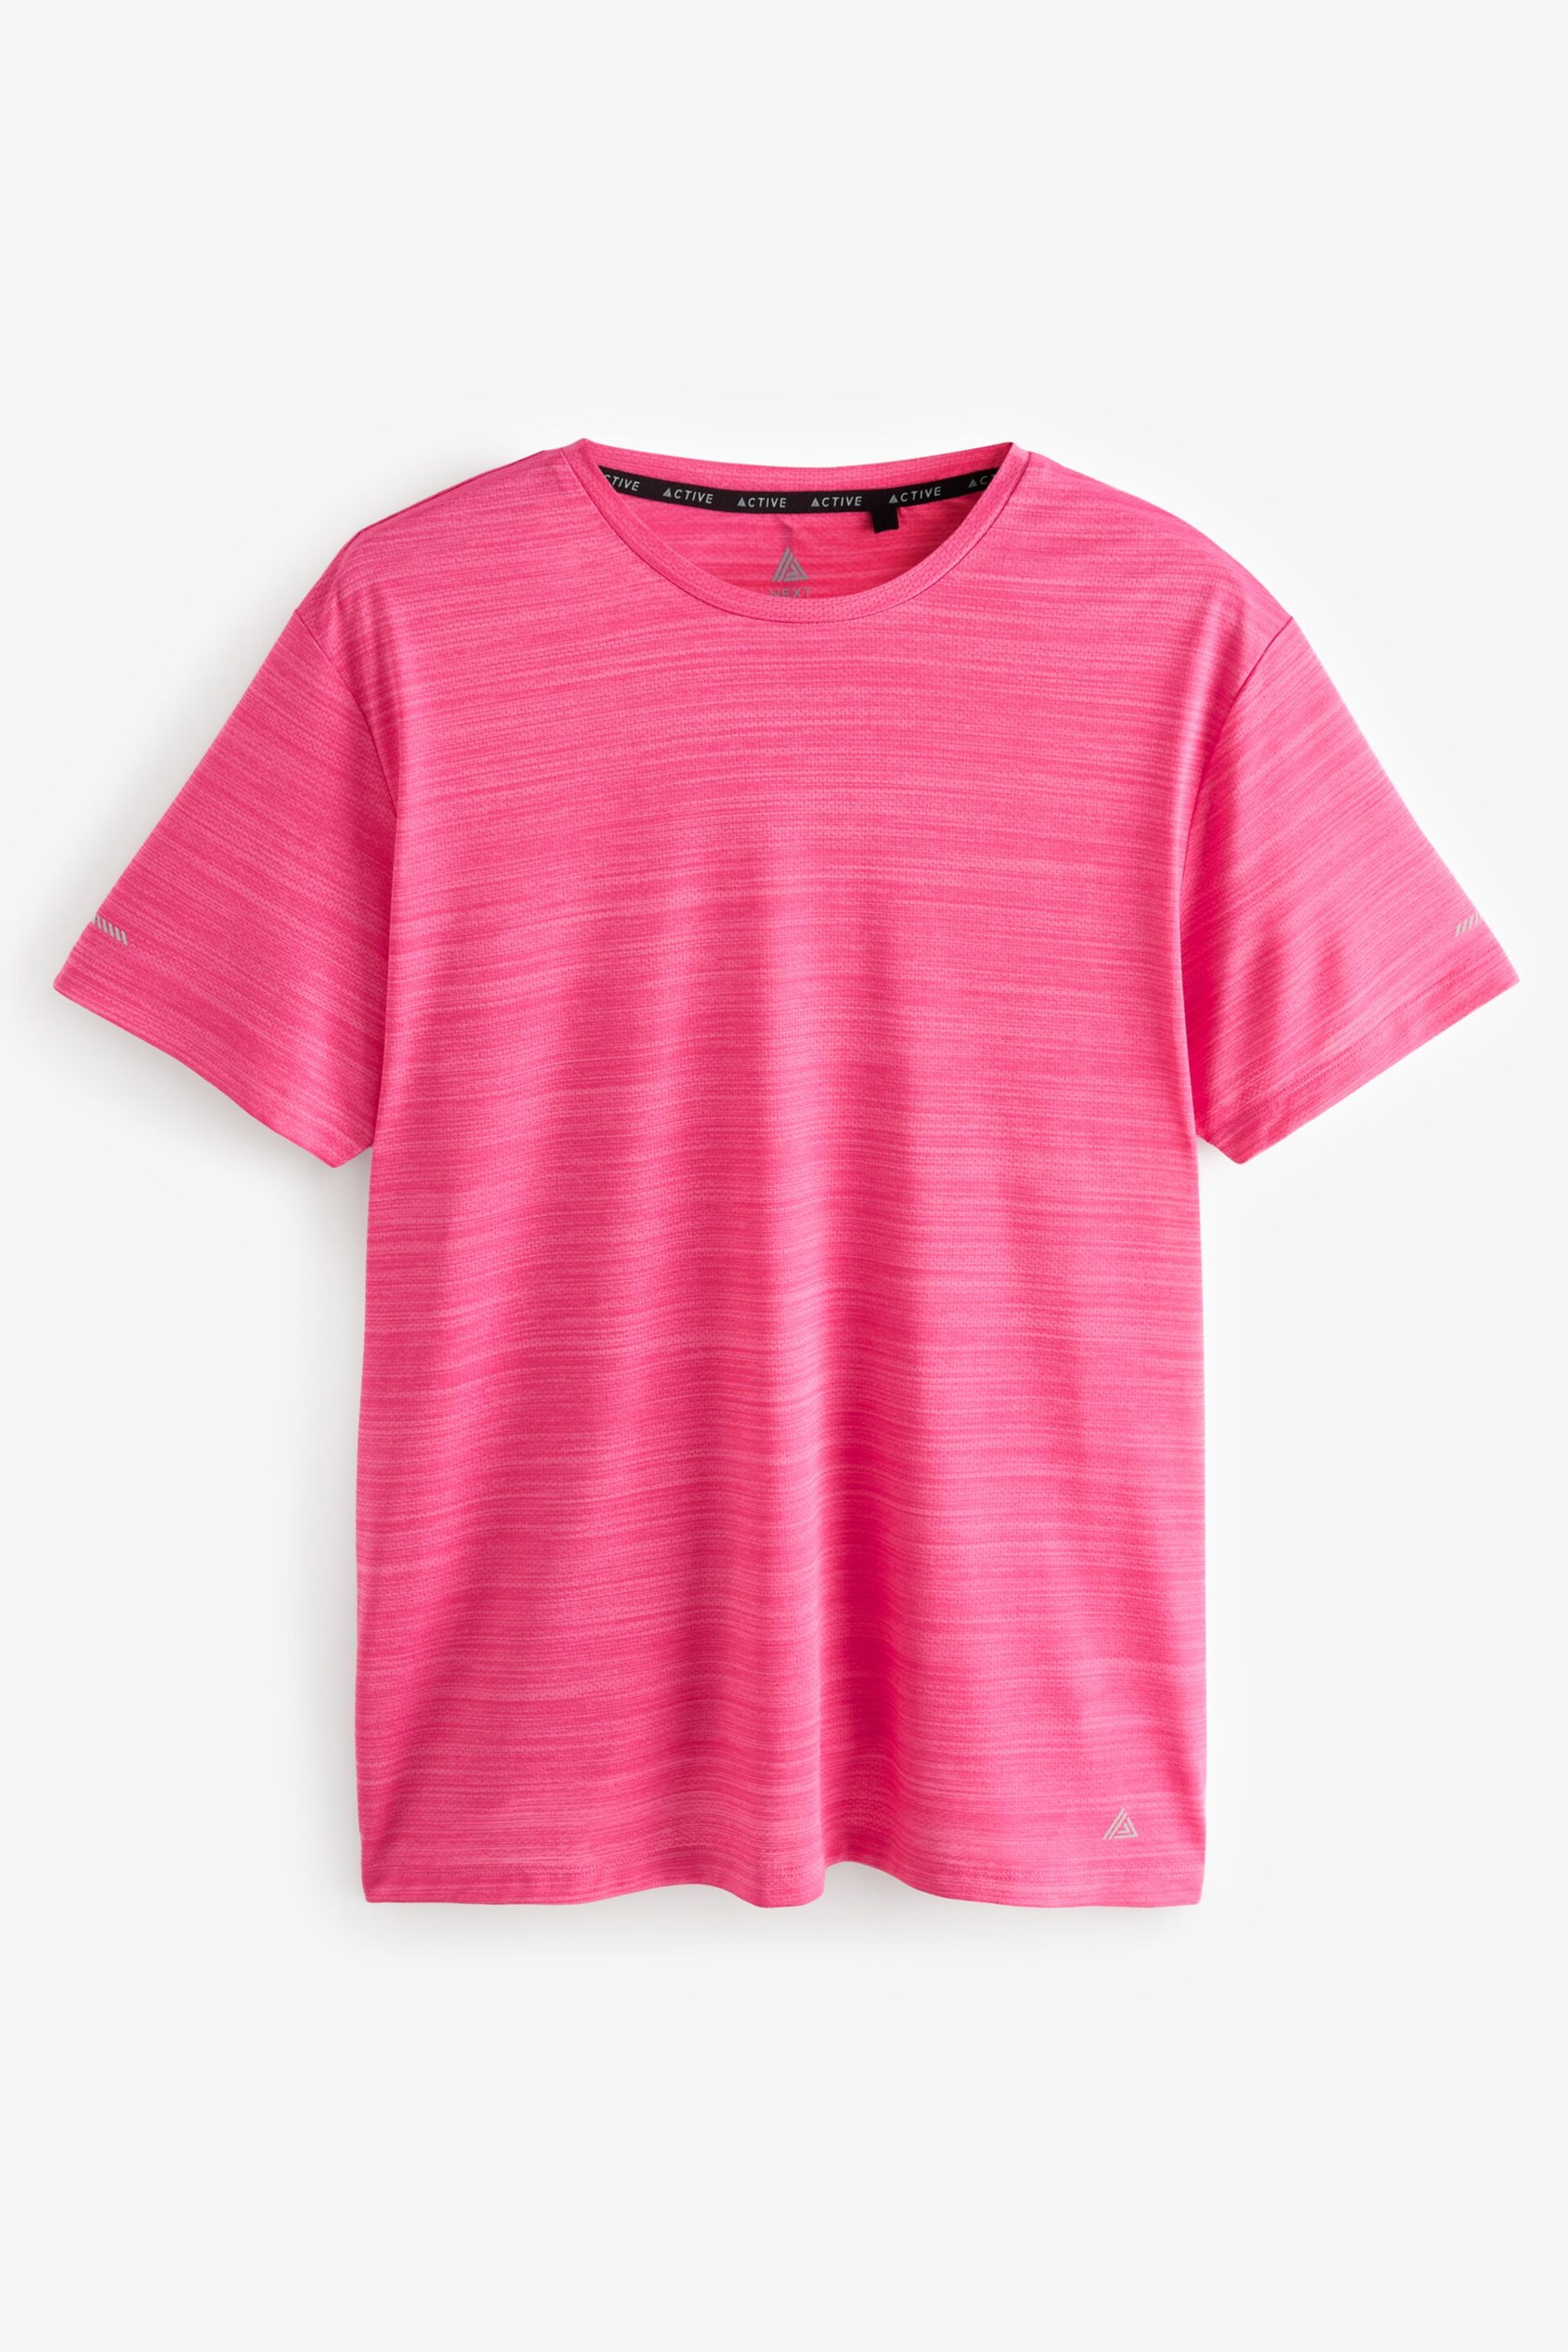 Pink Active Mesh Training T-Shirt - Image 7 of 9